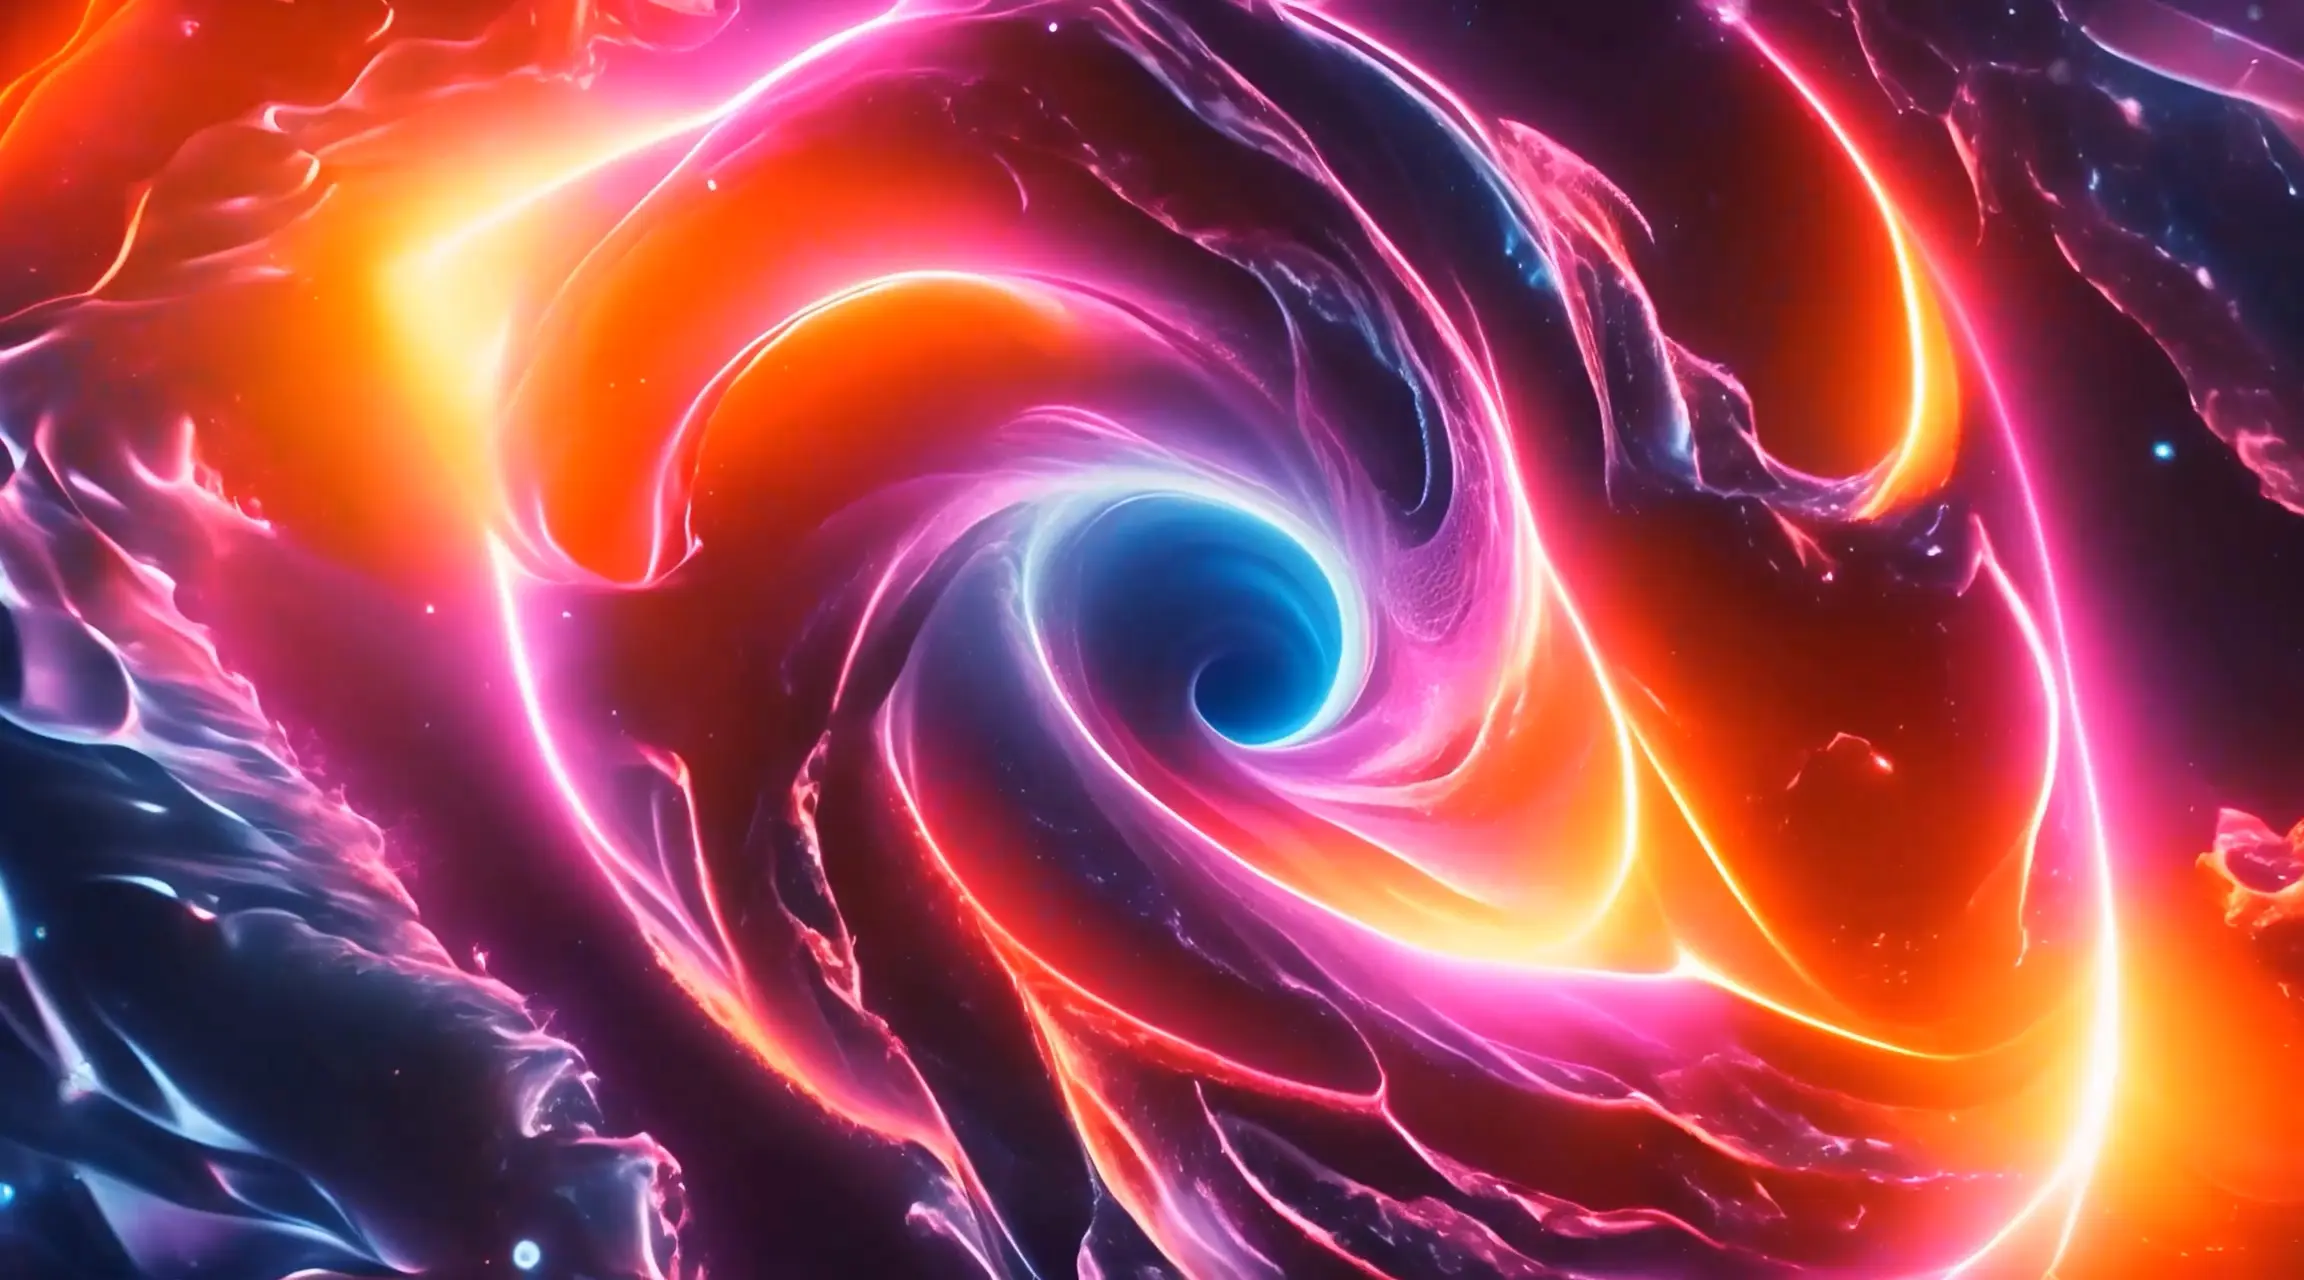 Nebular Blaze Vivid Space Energy Video Backdrop